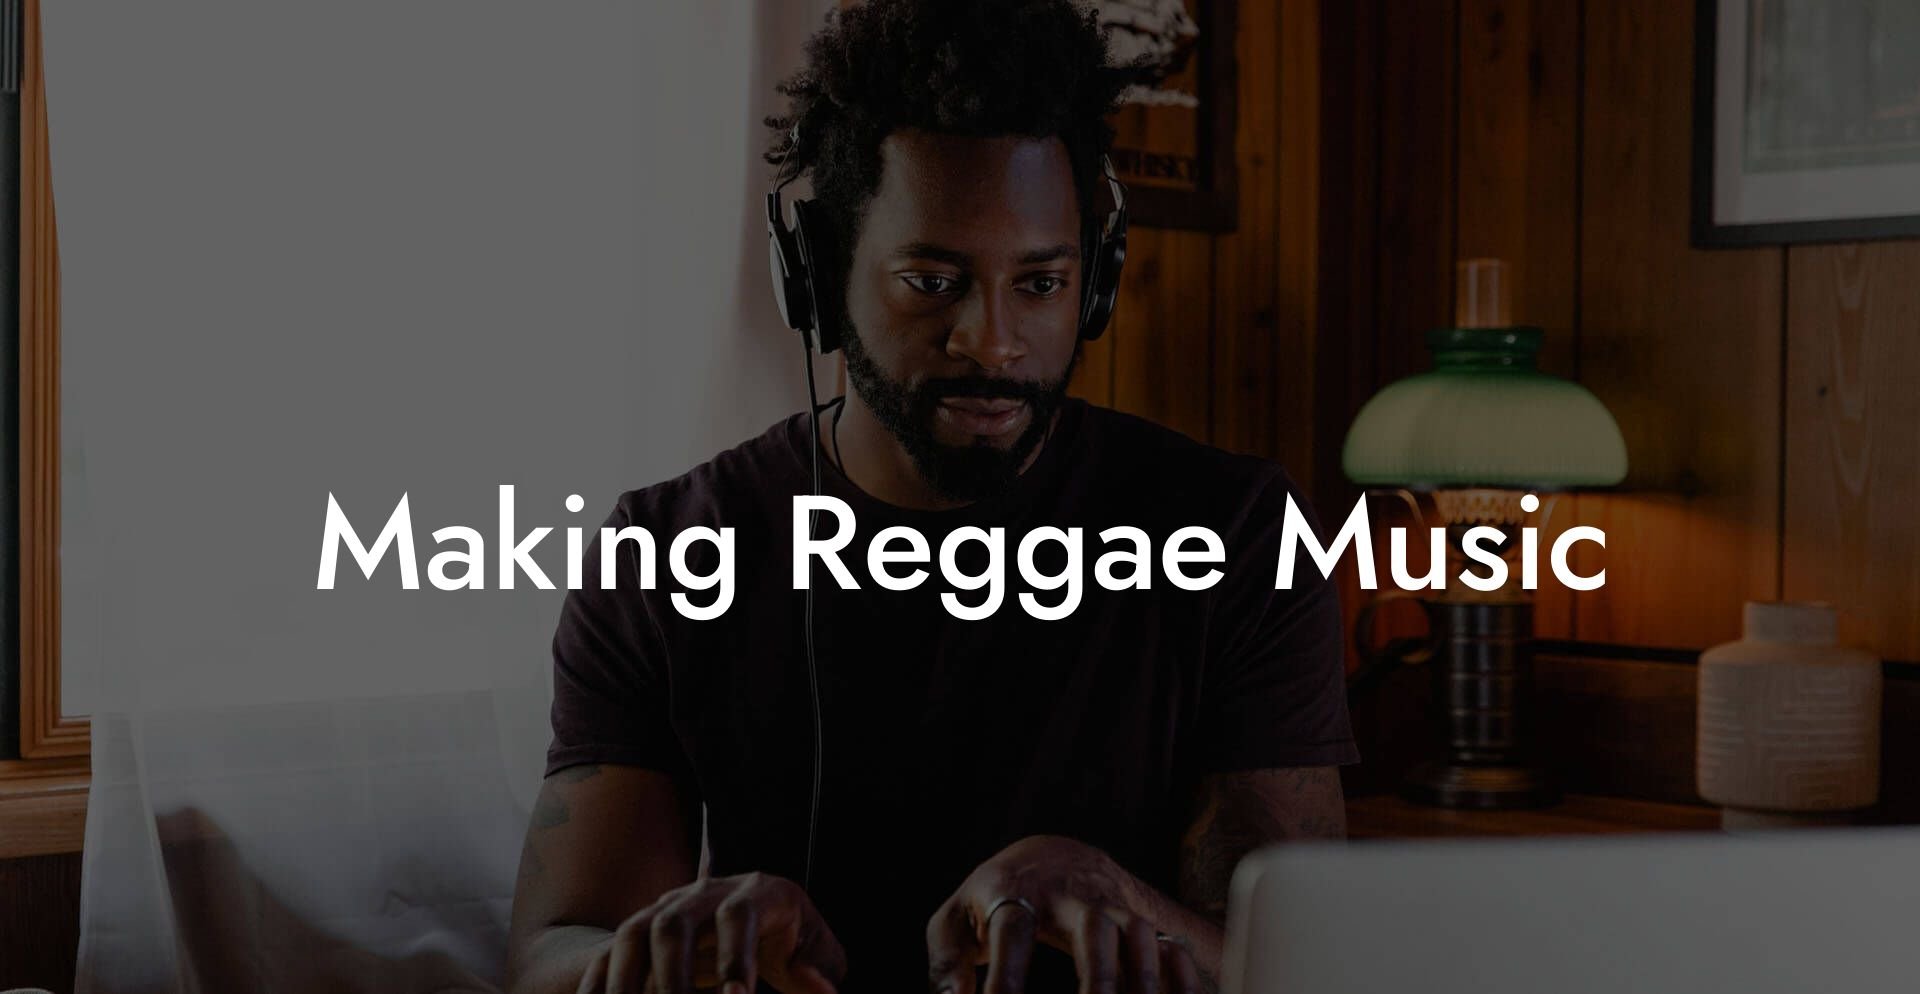 making reggae music lyric assistant